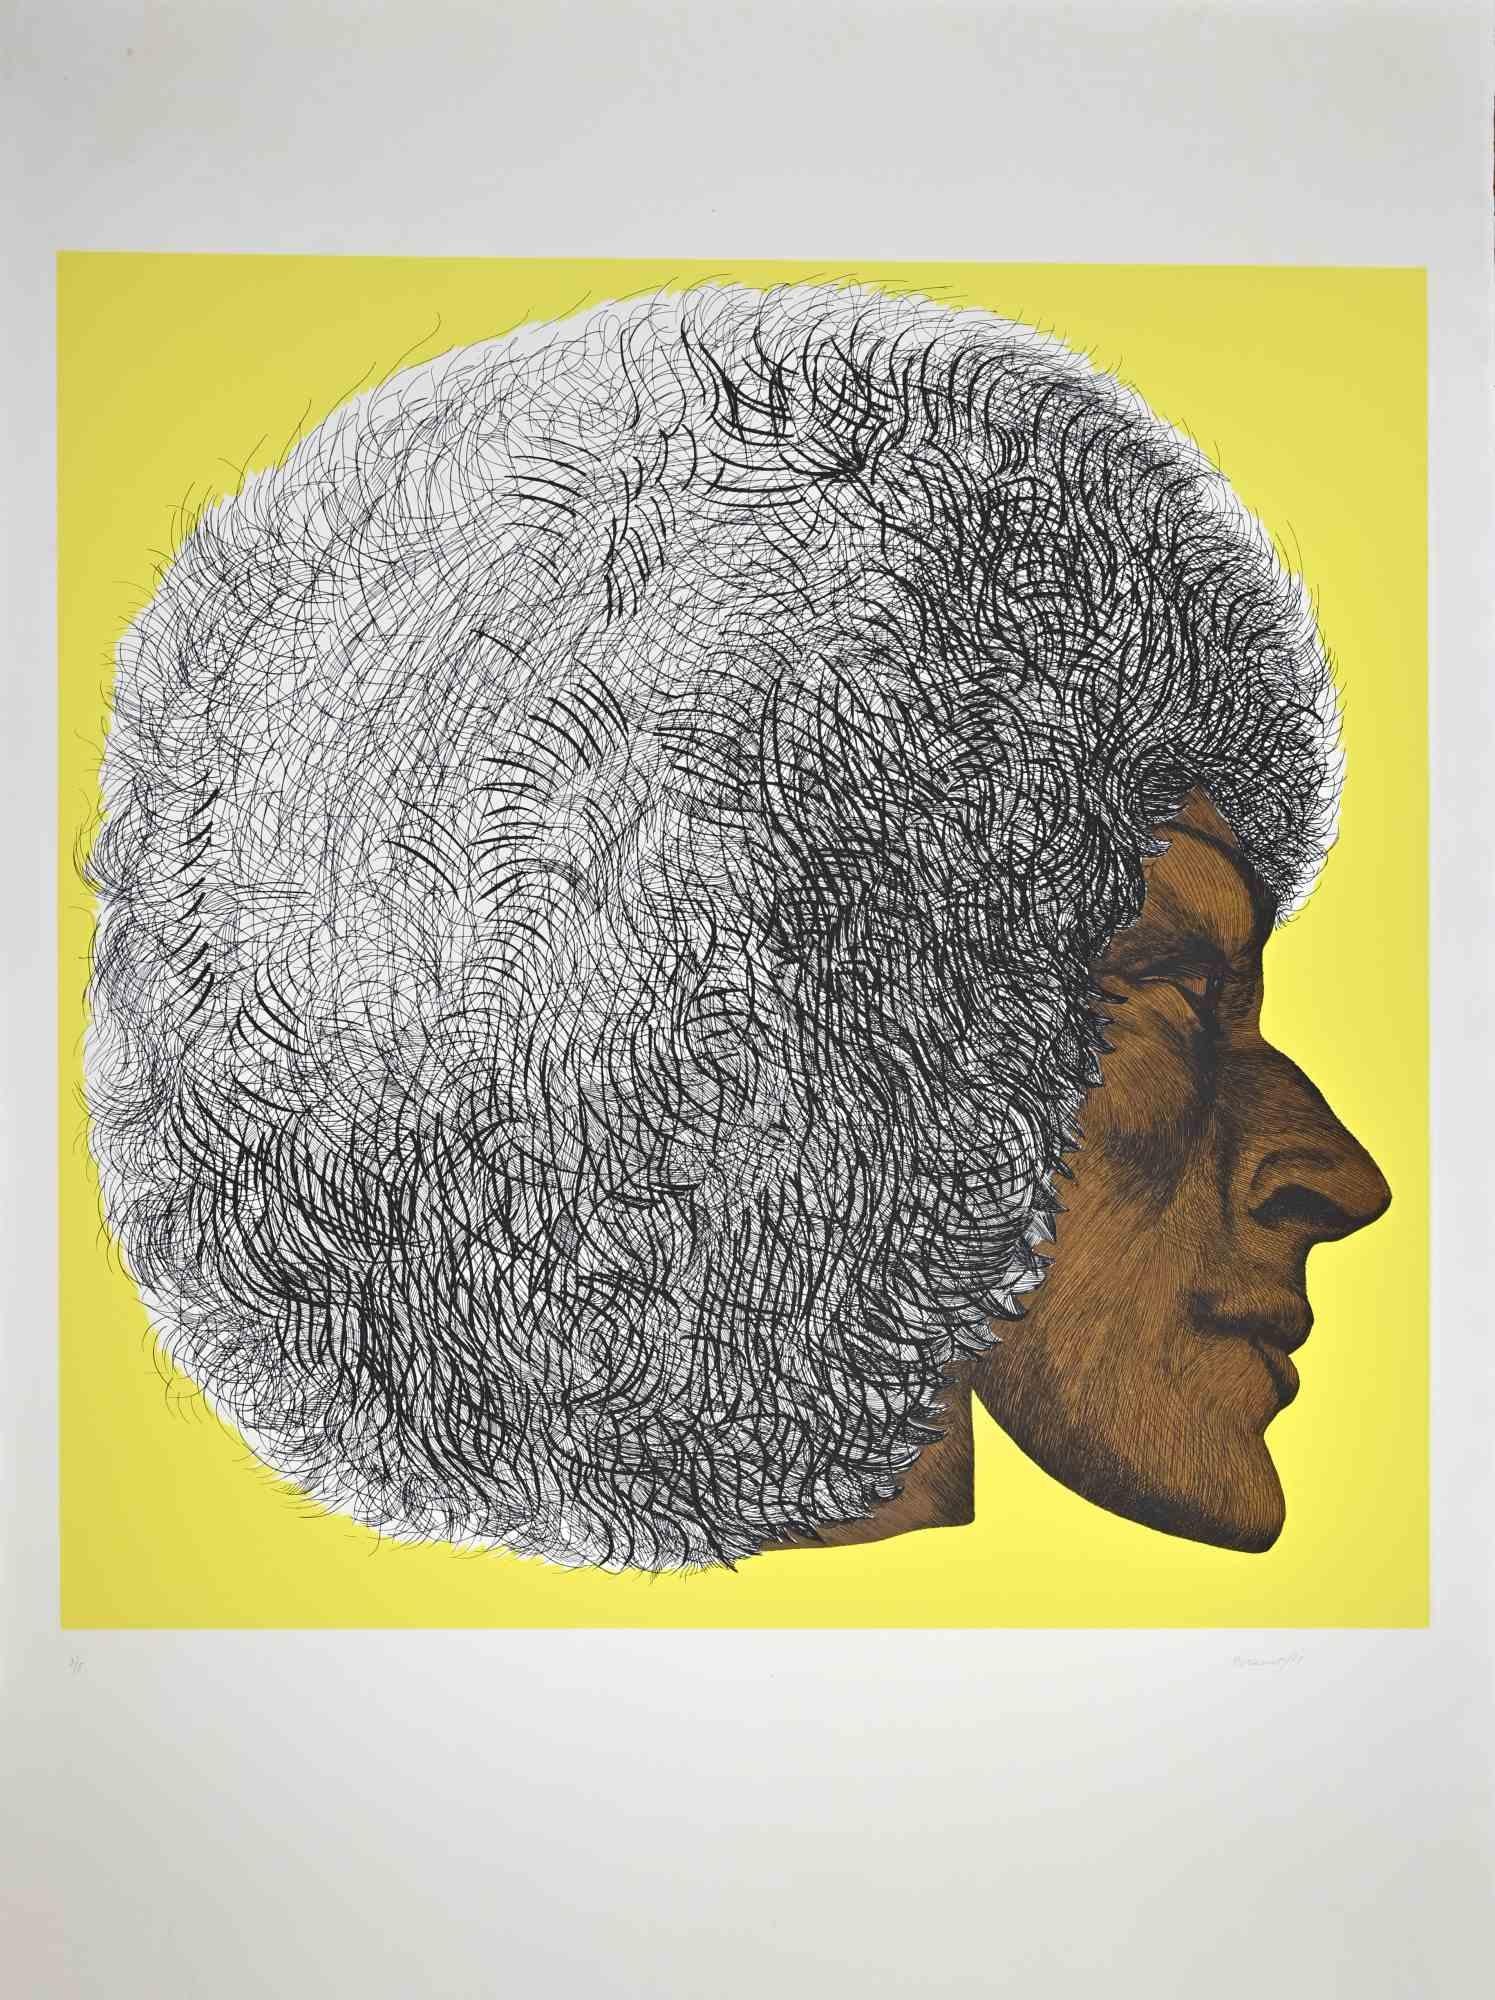  Profile Yellow II - Profilo Giallo II -  Etching by Giacomo Porzano - 1972 For Sale 1